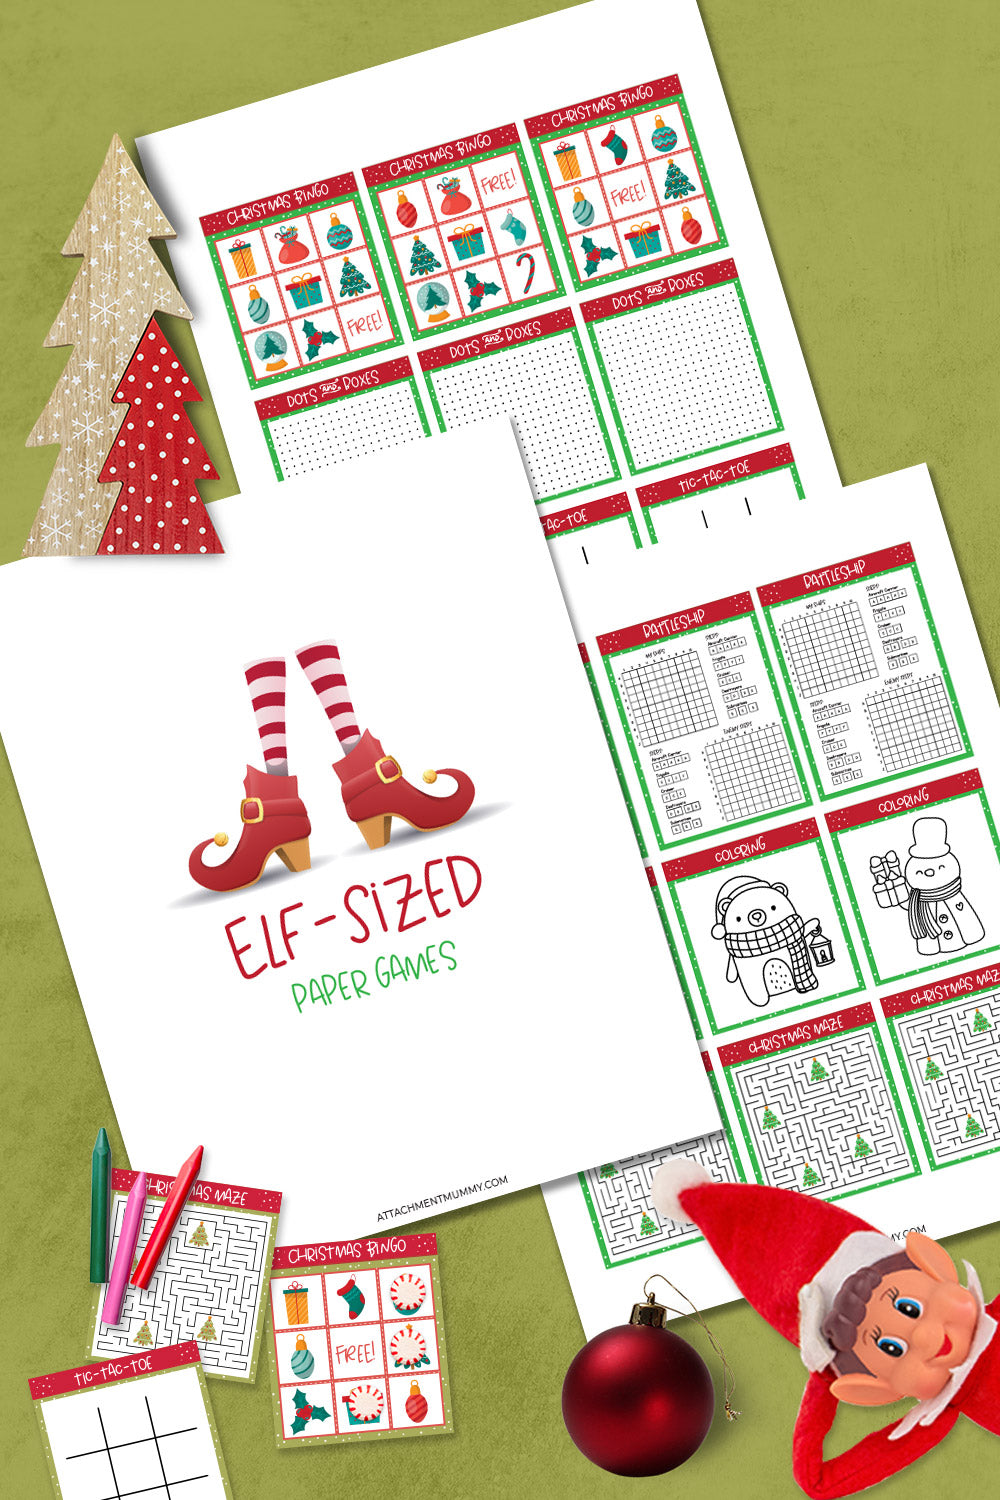 Elf-Sized Paper Games Printable Pack